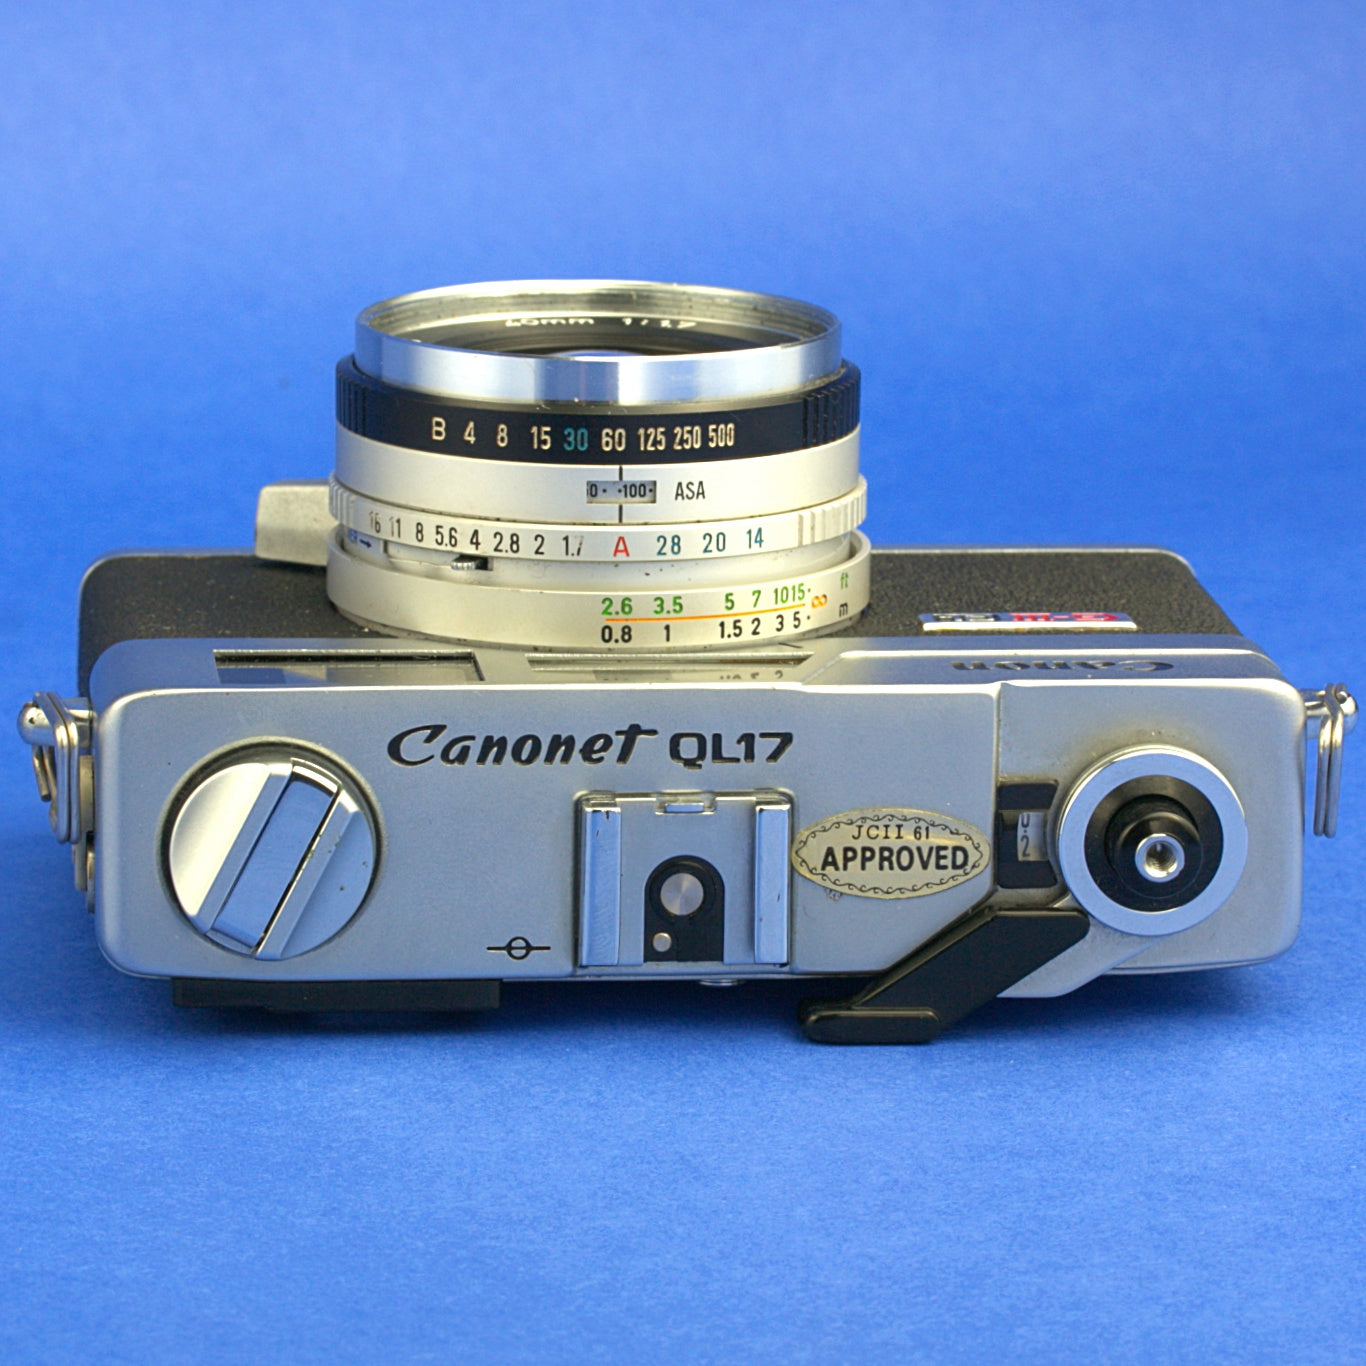 Canon Canonet QL17 G-III Film Camera Not Working